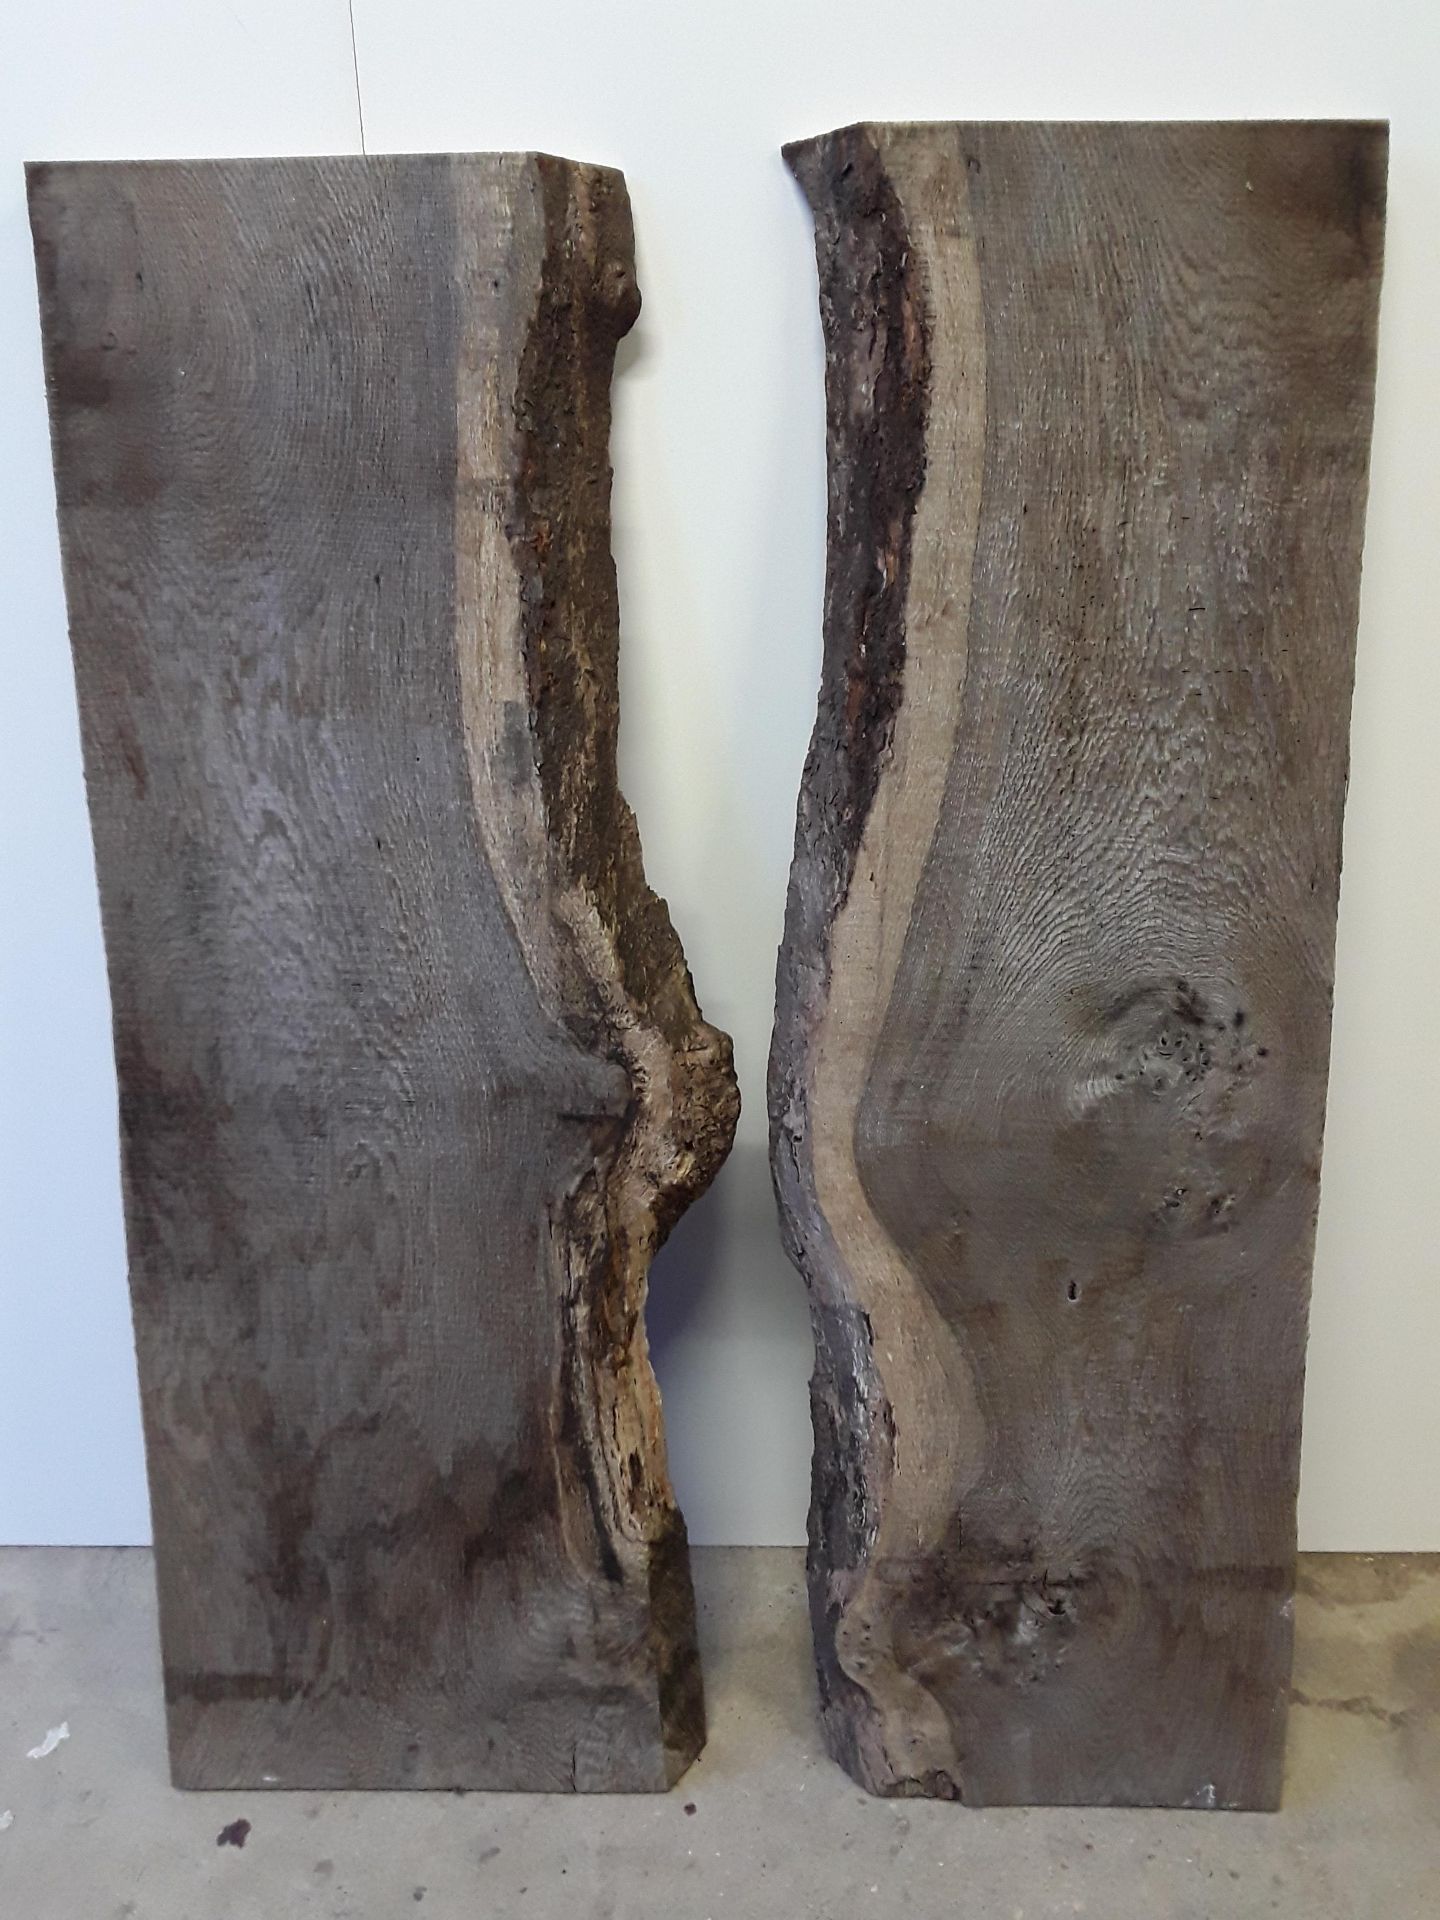 2 x Hardwood Air Dried Sawn Waney Edge / Live Edge English Oak Boards / Resin River Table